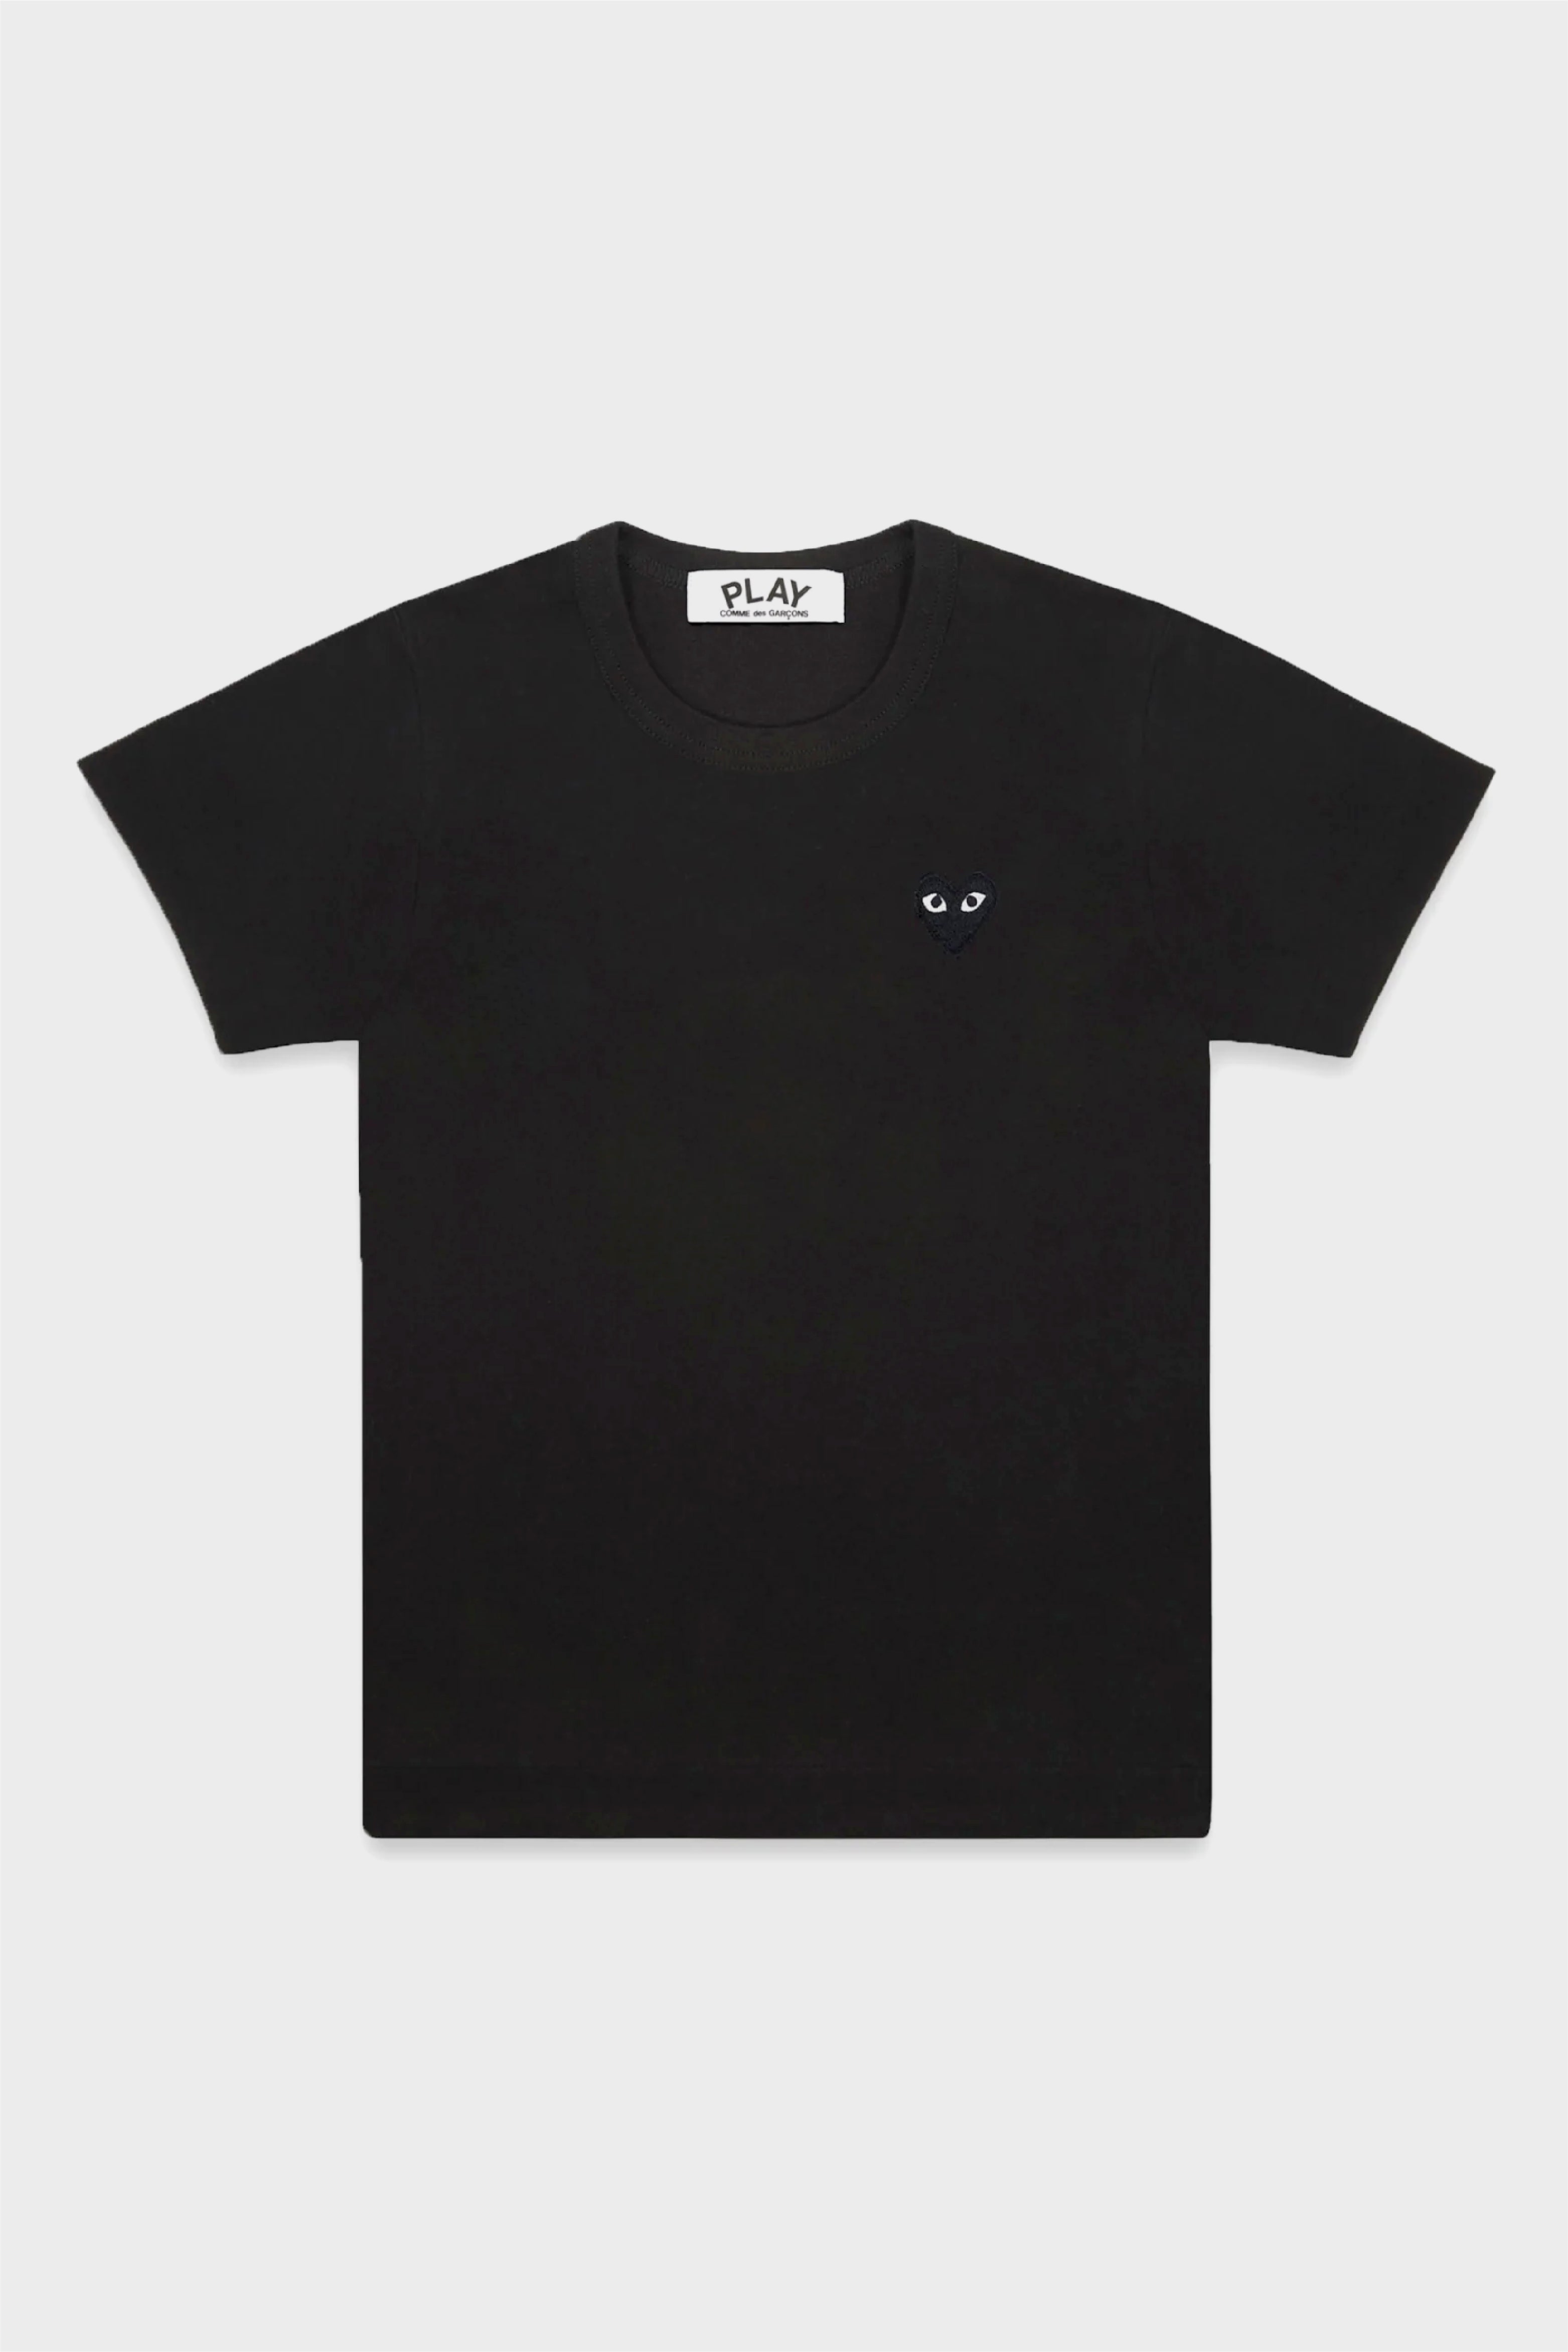 Selectshop FRAME - COMME DES GARCONS PLAY Black Play T-Shirt (Black) T-Shirts Dubai